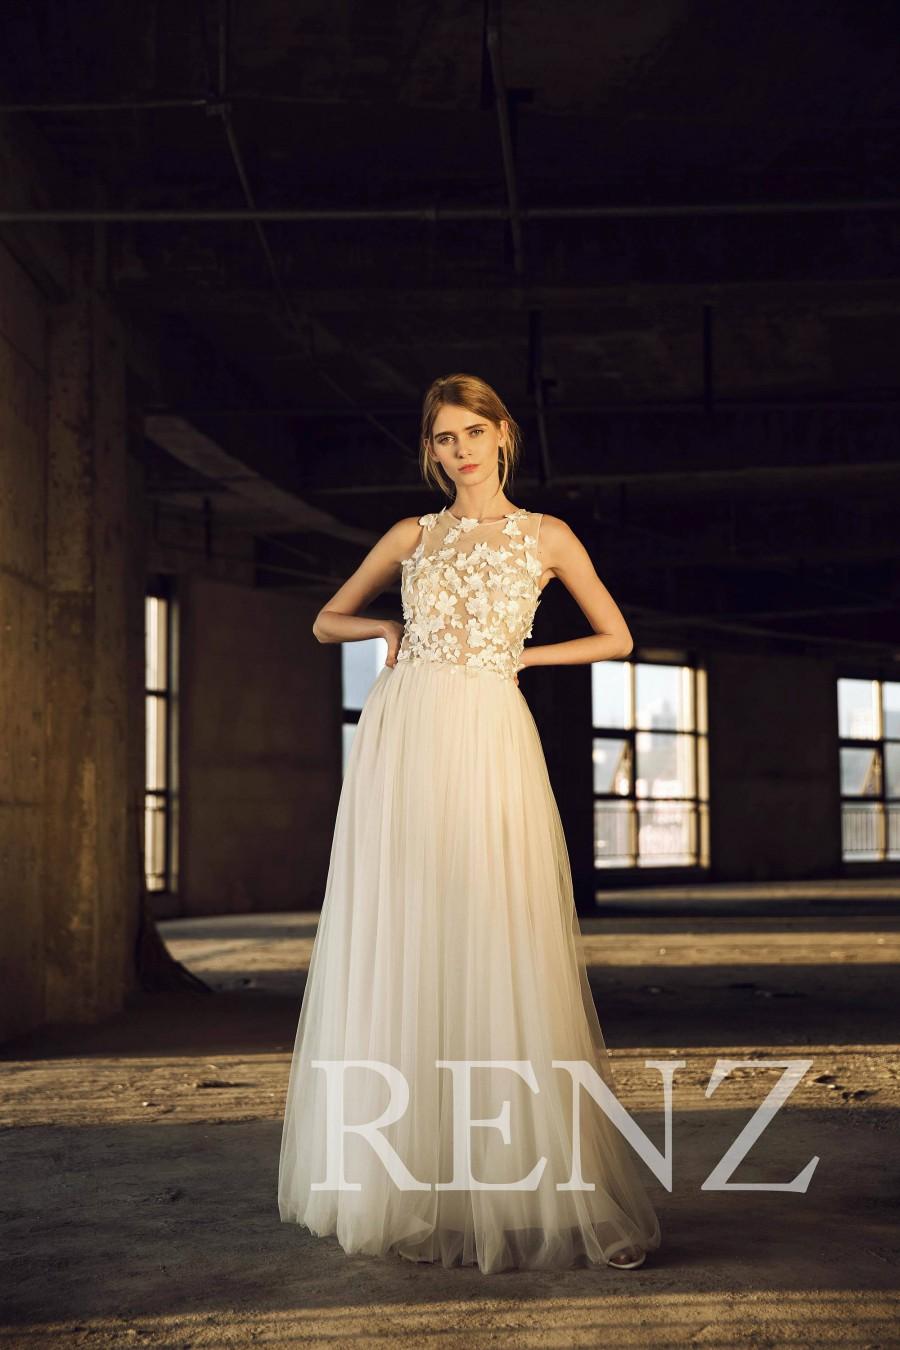 Hochzeit - Wedding Dress Off White Tulle Bride Dress,Lace Applique Bridal Dress,Sleeveless Lace Evening Dress,Illusion Boat Neck Long Maxi Dress(LW159)